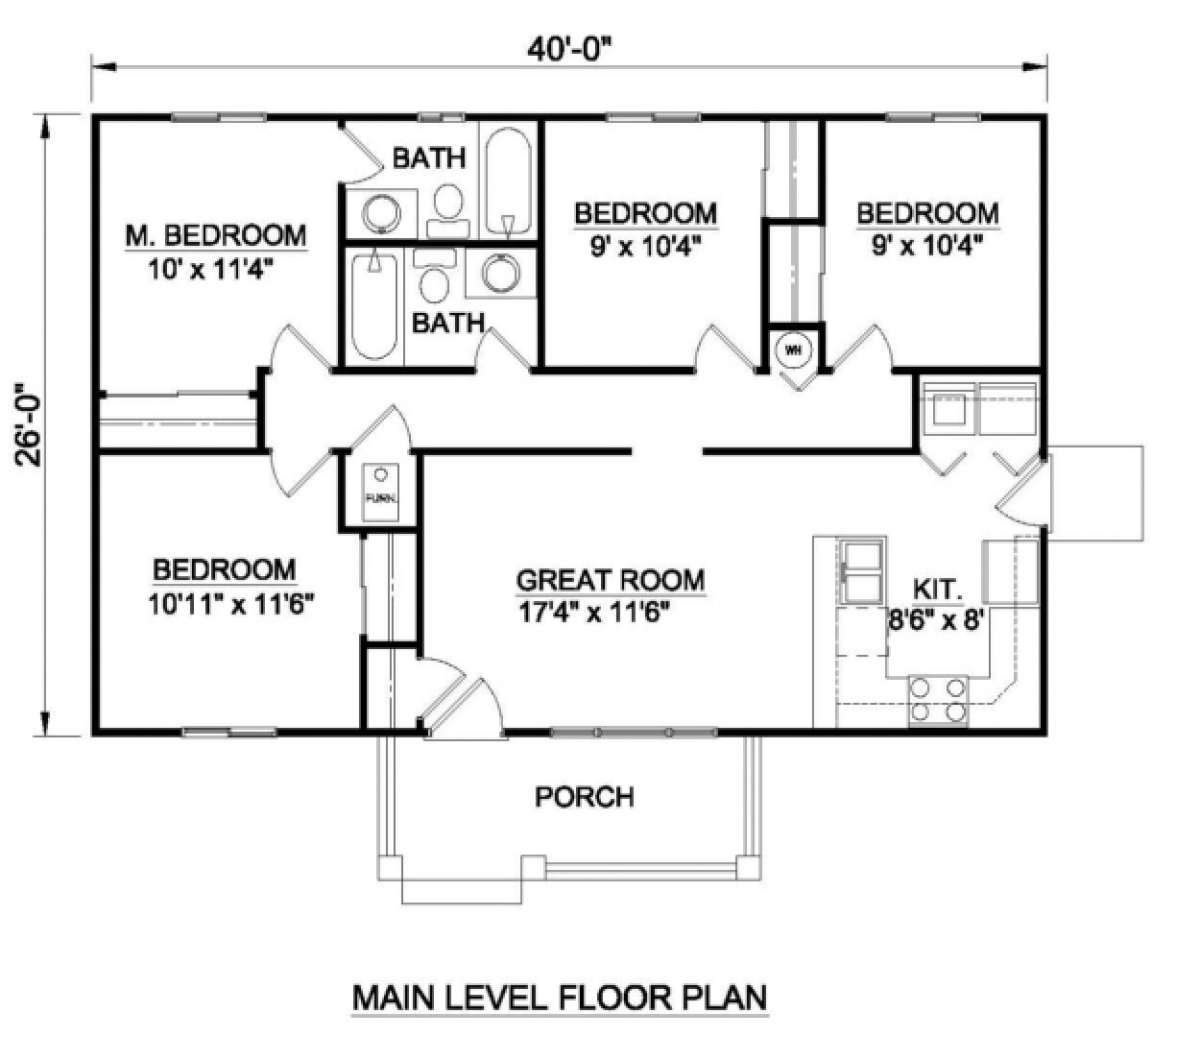 Ranch Plan 1040 Square Feet 4 Bedrooms 2 Bathrooms 340 00026